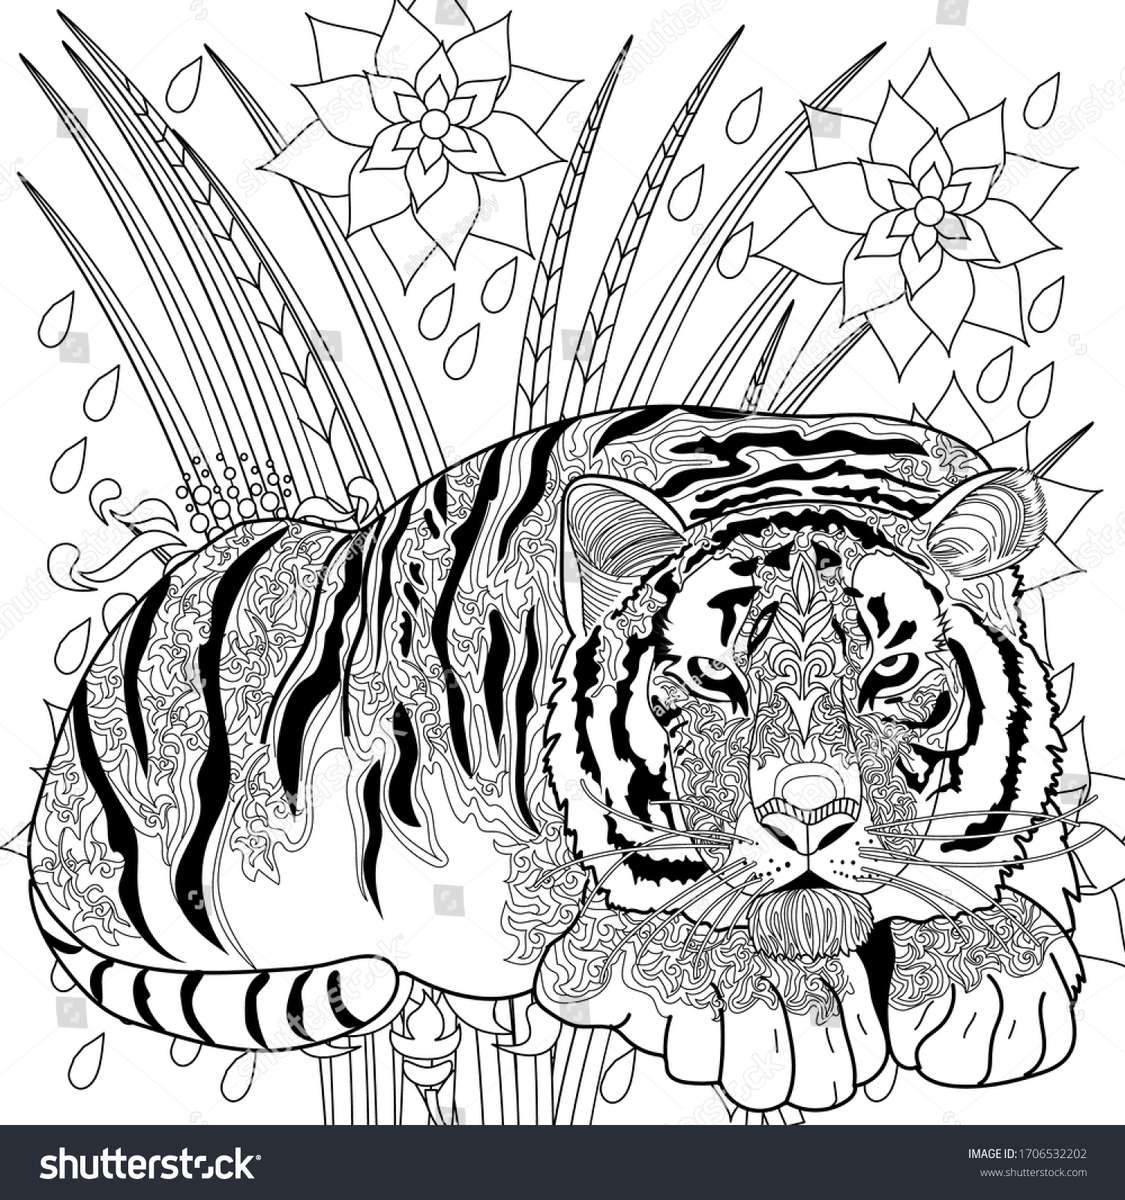 Зображення тигра скласти пазл онлайн з фото